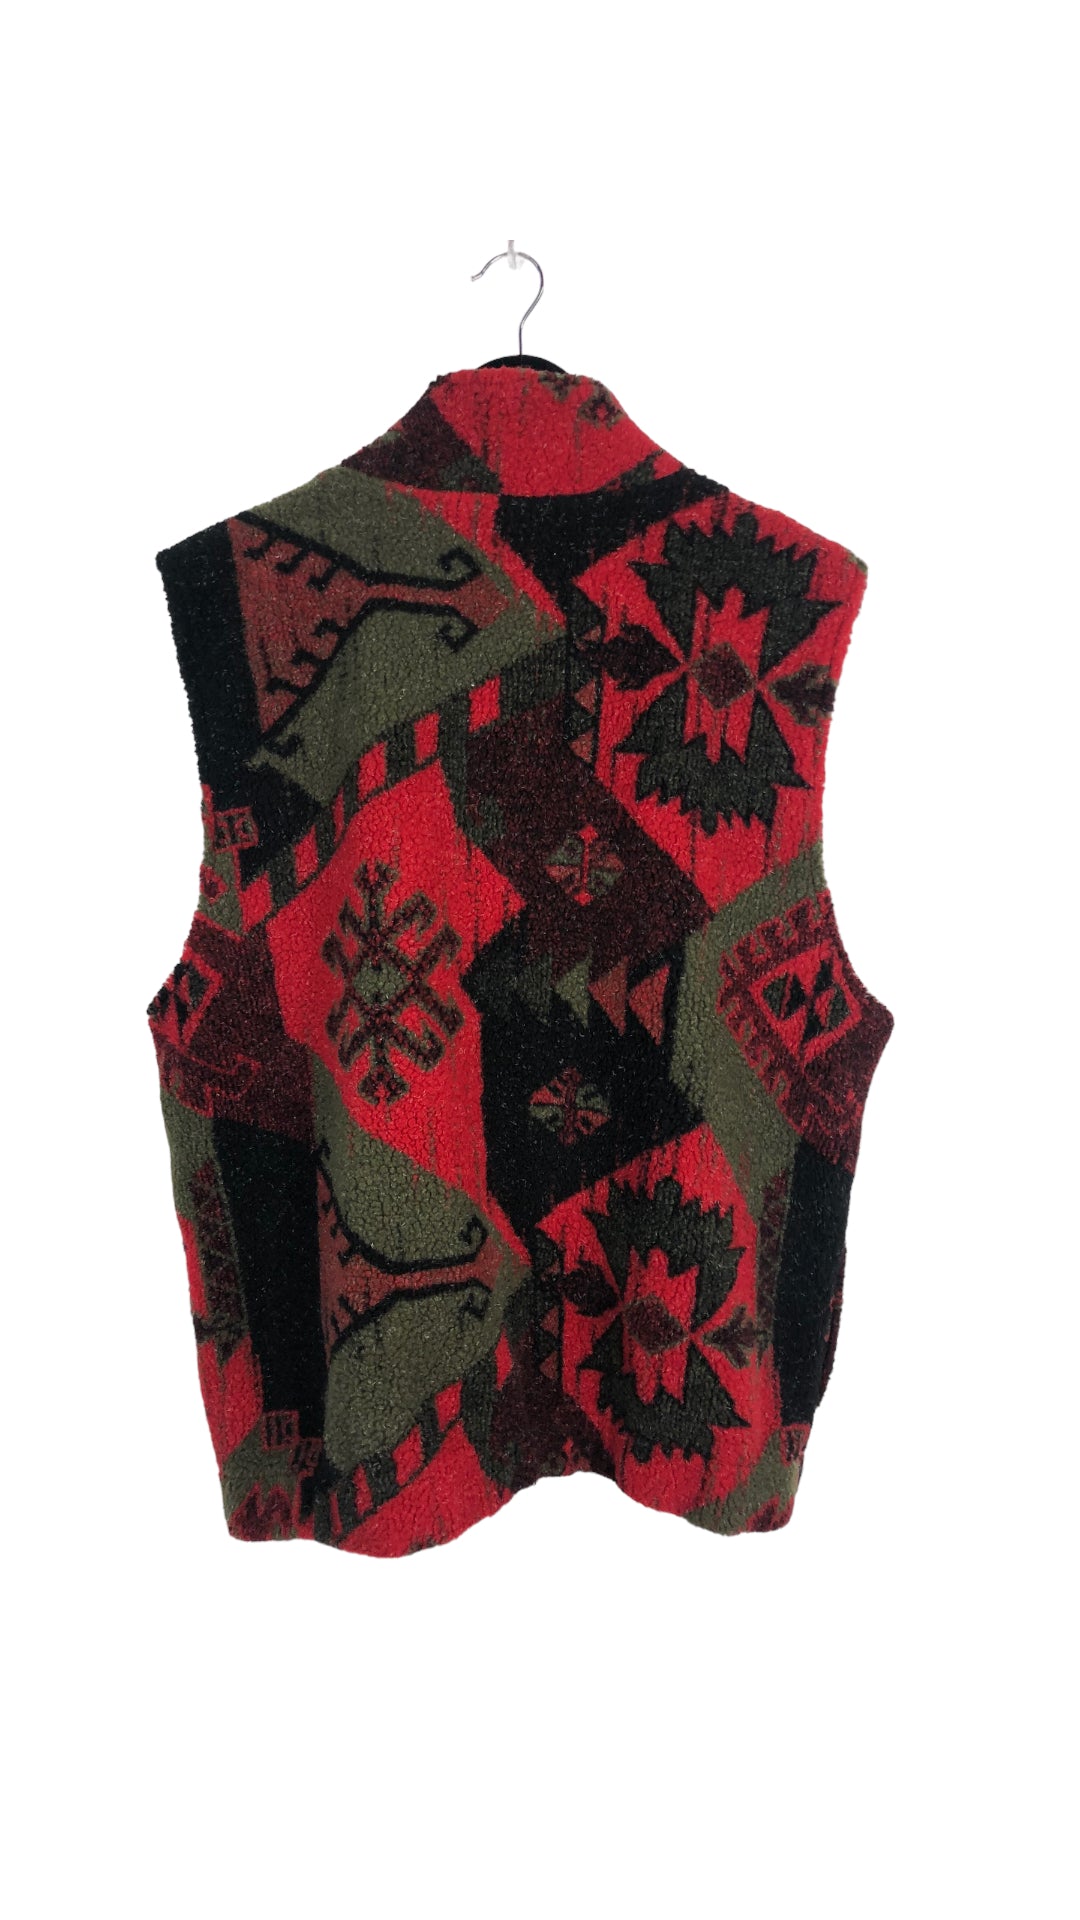 Load image into Gallery viewer, VTG Aztec Fleece Sweater Vet Sz L
